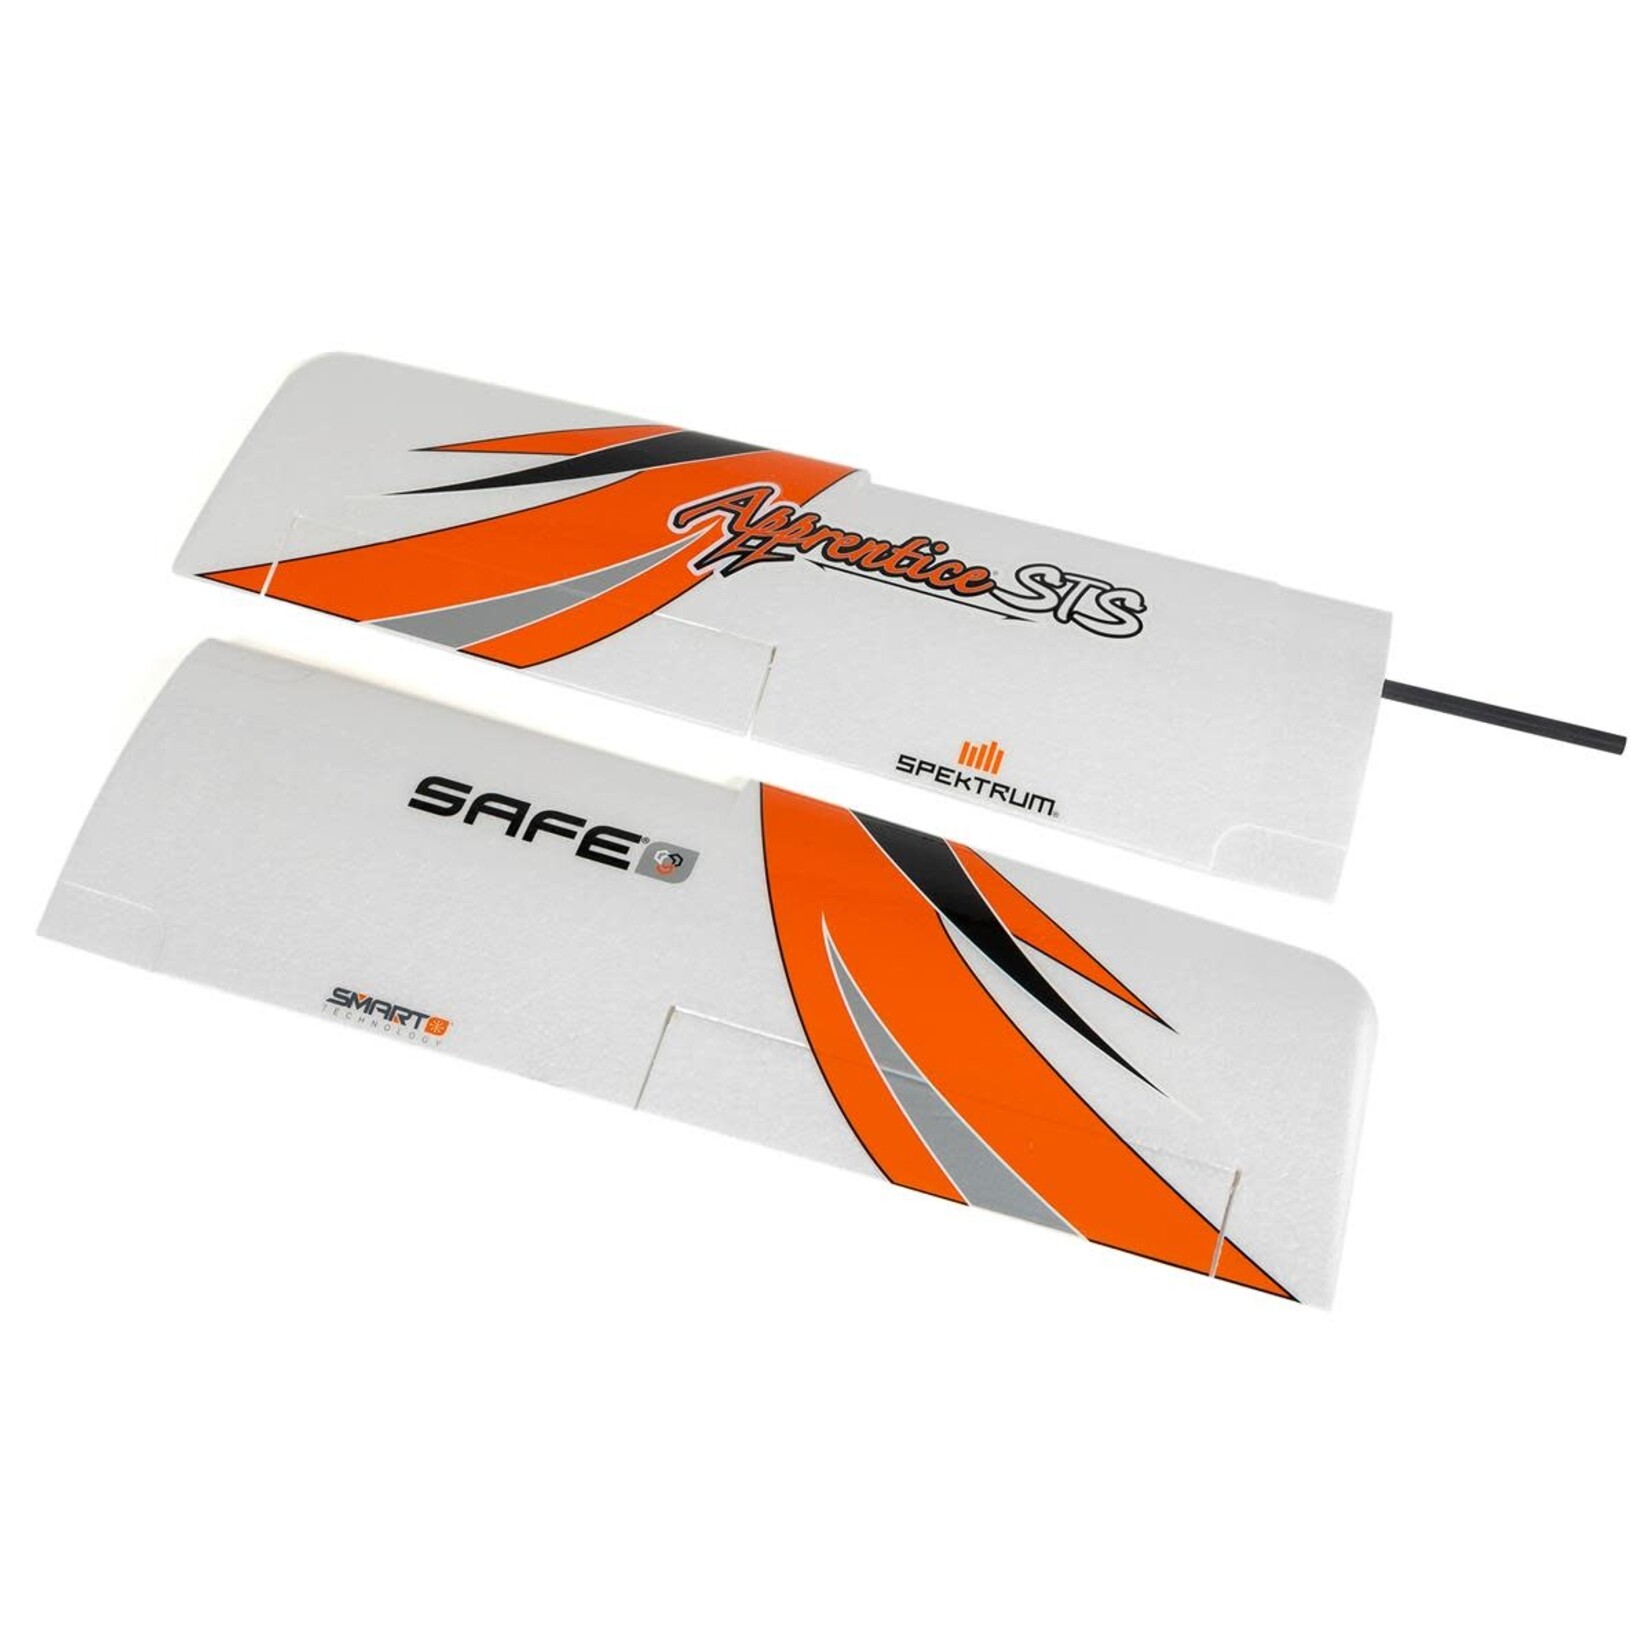 E-flite E-flite Apprentice STS Wing Set #EFL310013